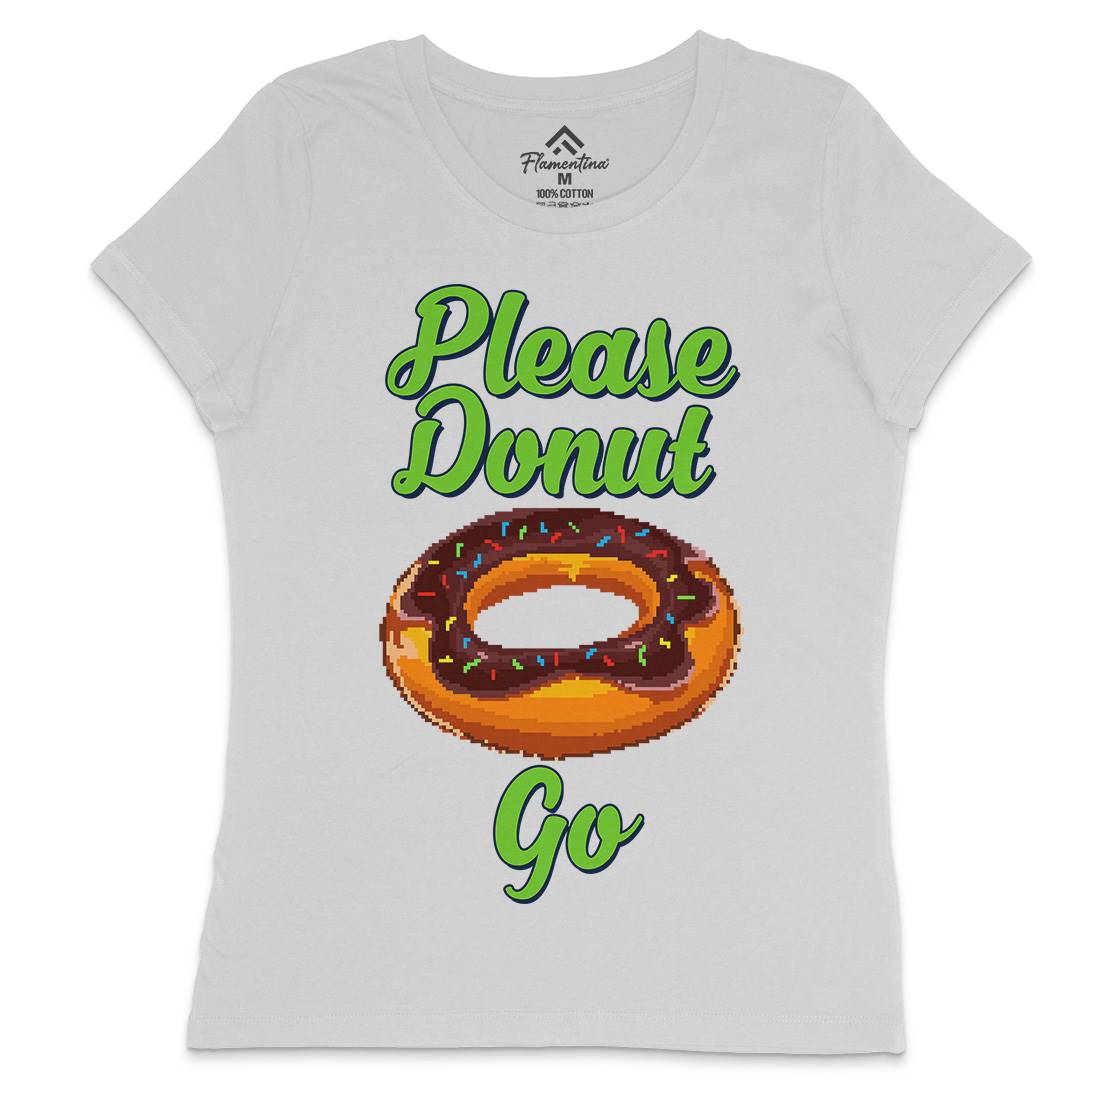 Please Donut Go Food Pun Womens Crew Neck T-Shirt Food B947